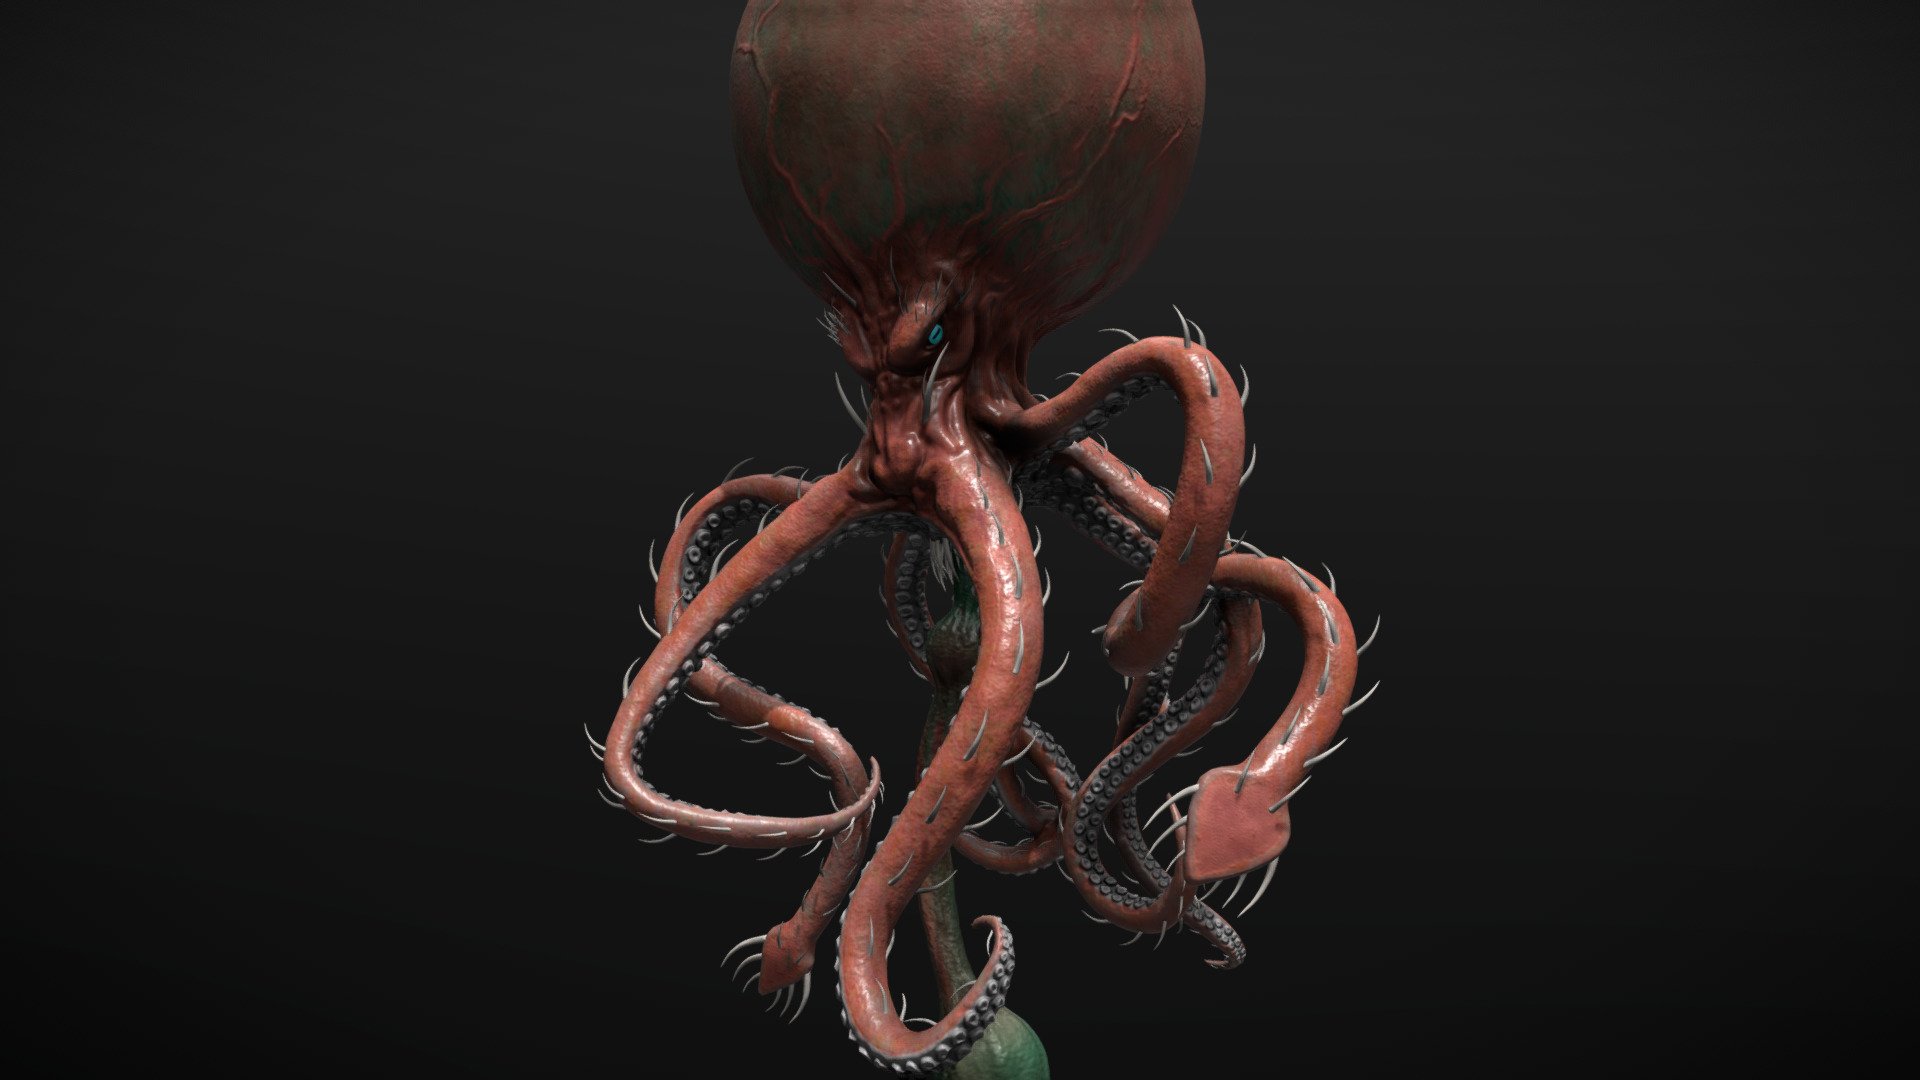 Thorny octopus